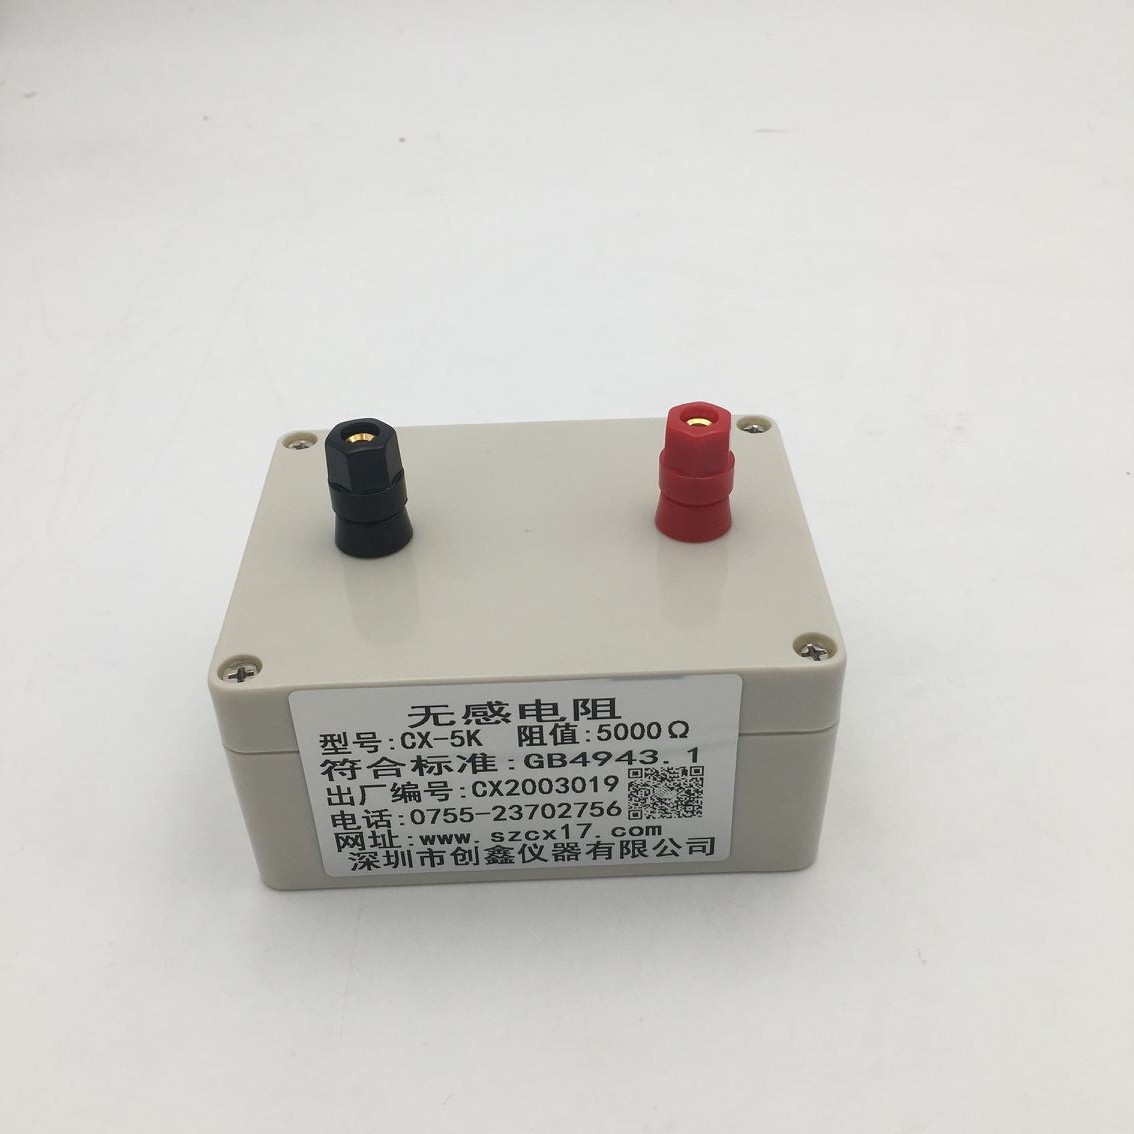 GB4943.1标准5000Ω无感电阻